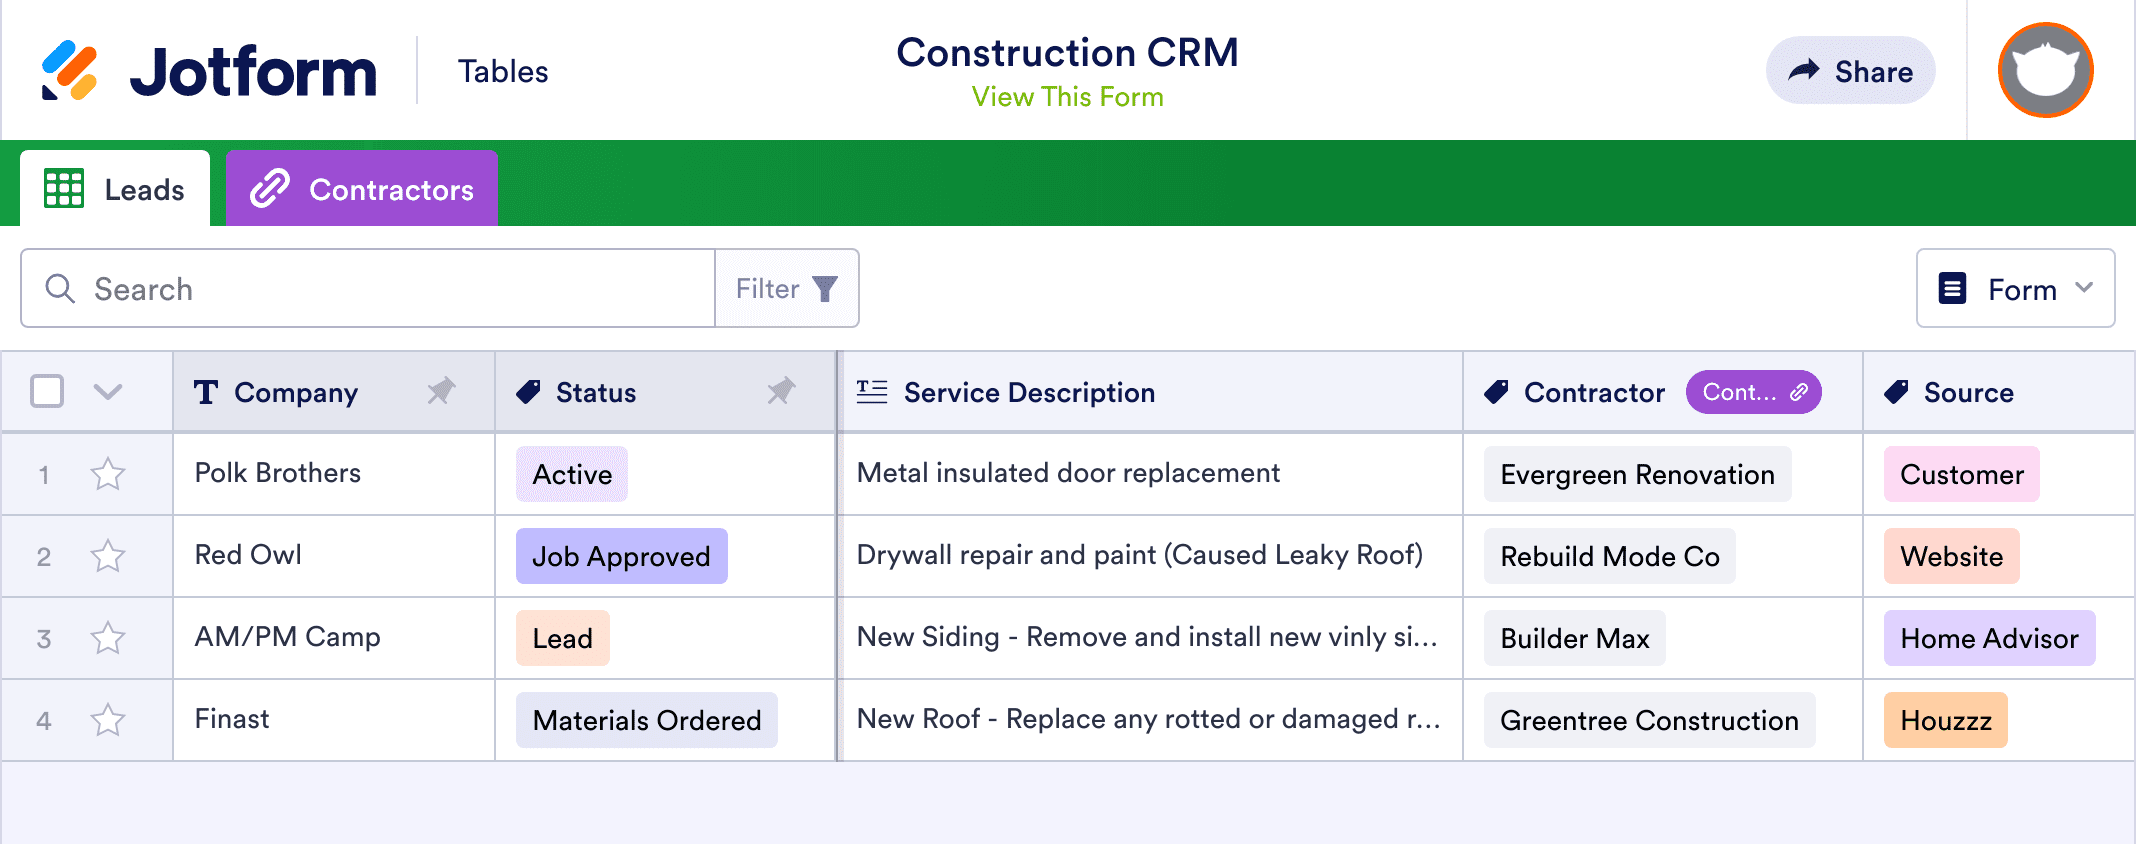 Construction CRM